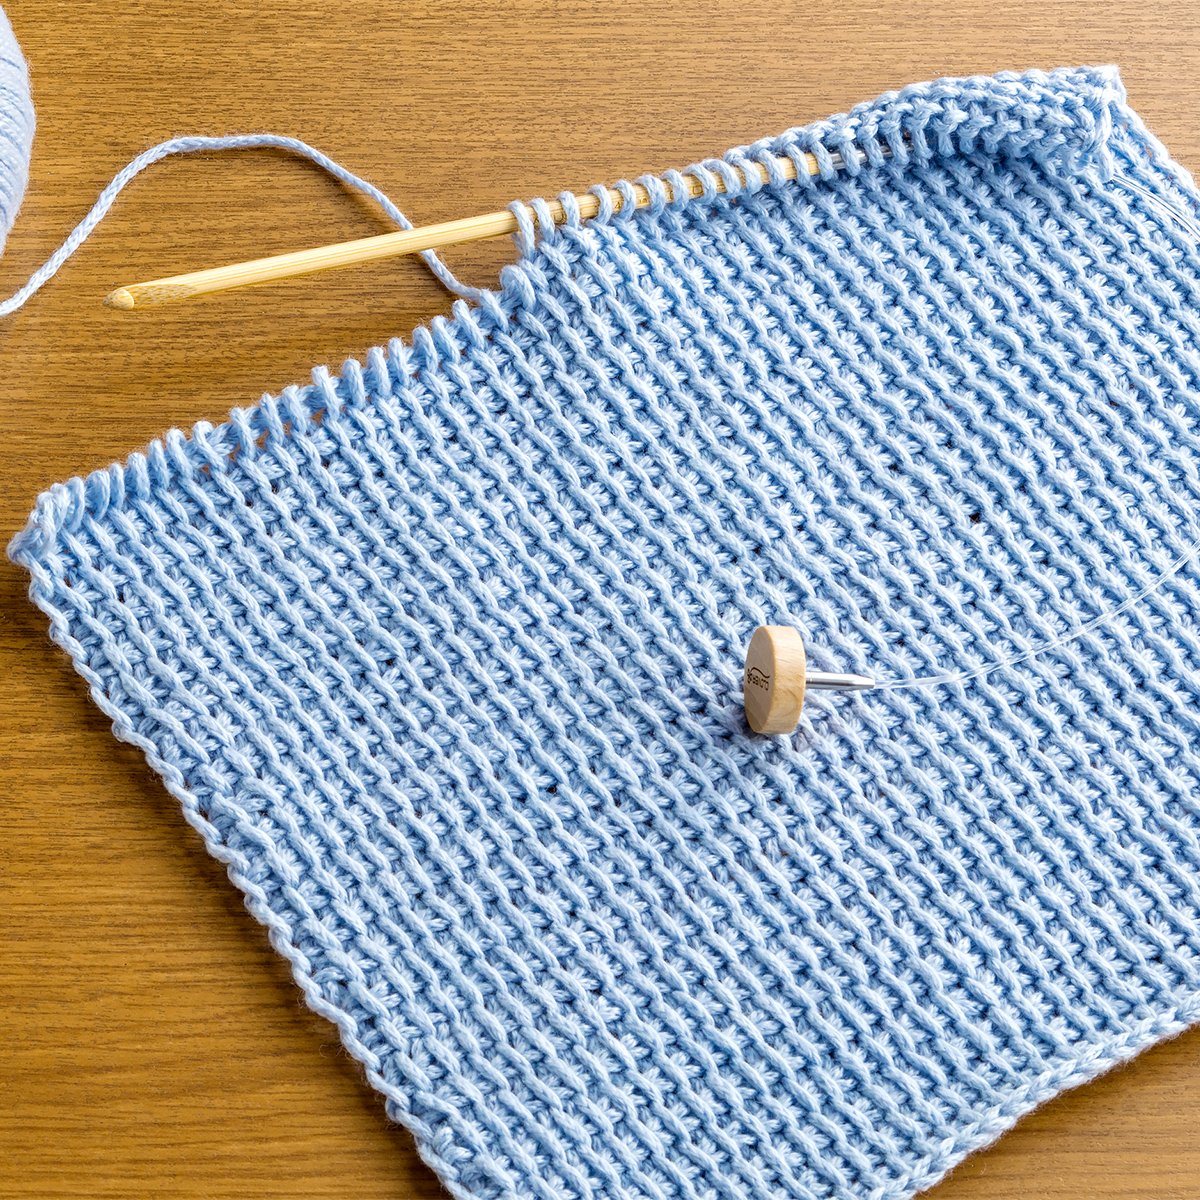  Tunisian Crochet Hooks Set 2-8 mm Aluminum Afghan Crochet  Hooks, 3.5-12 mm Plastic Cable Weave Knitting Needle with Storage Bag,  Scissors, Stitch Markers, Blunt Needles, Measure Tape for Beginner